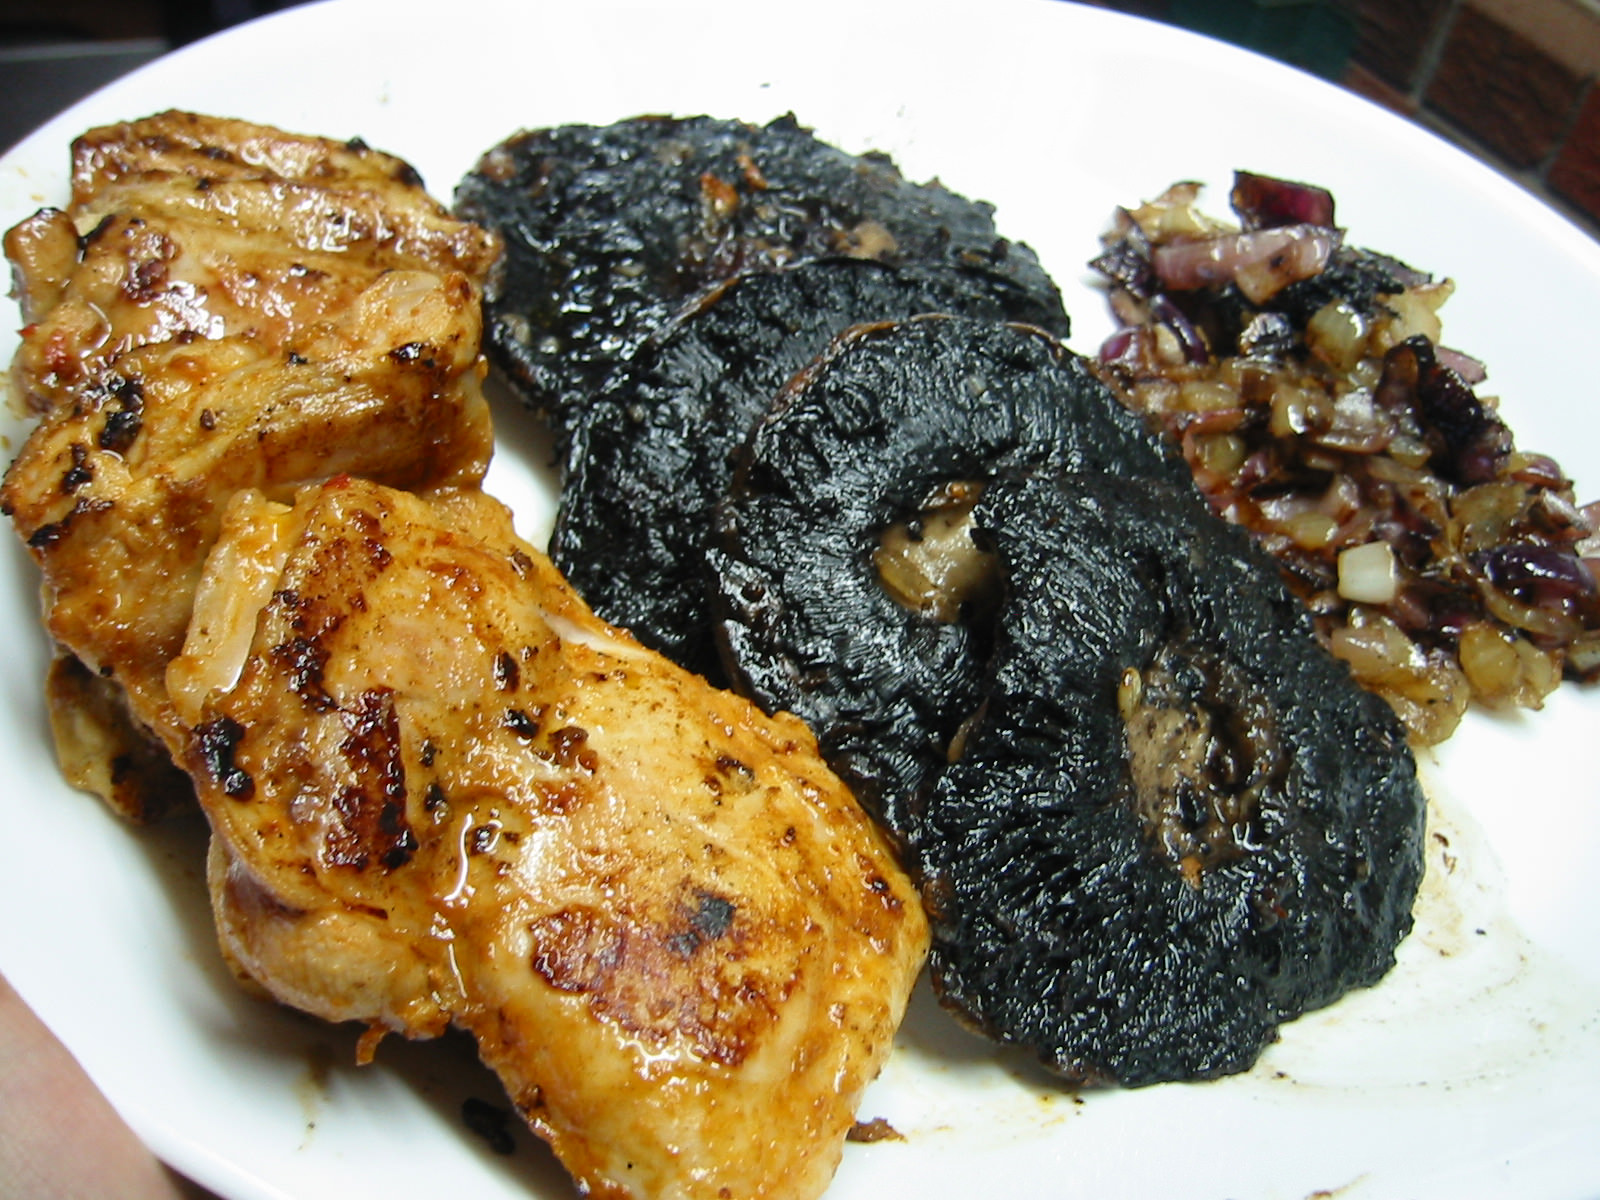 Platter of chicken, mushrooms and onions